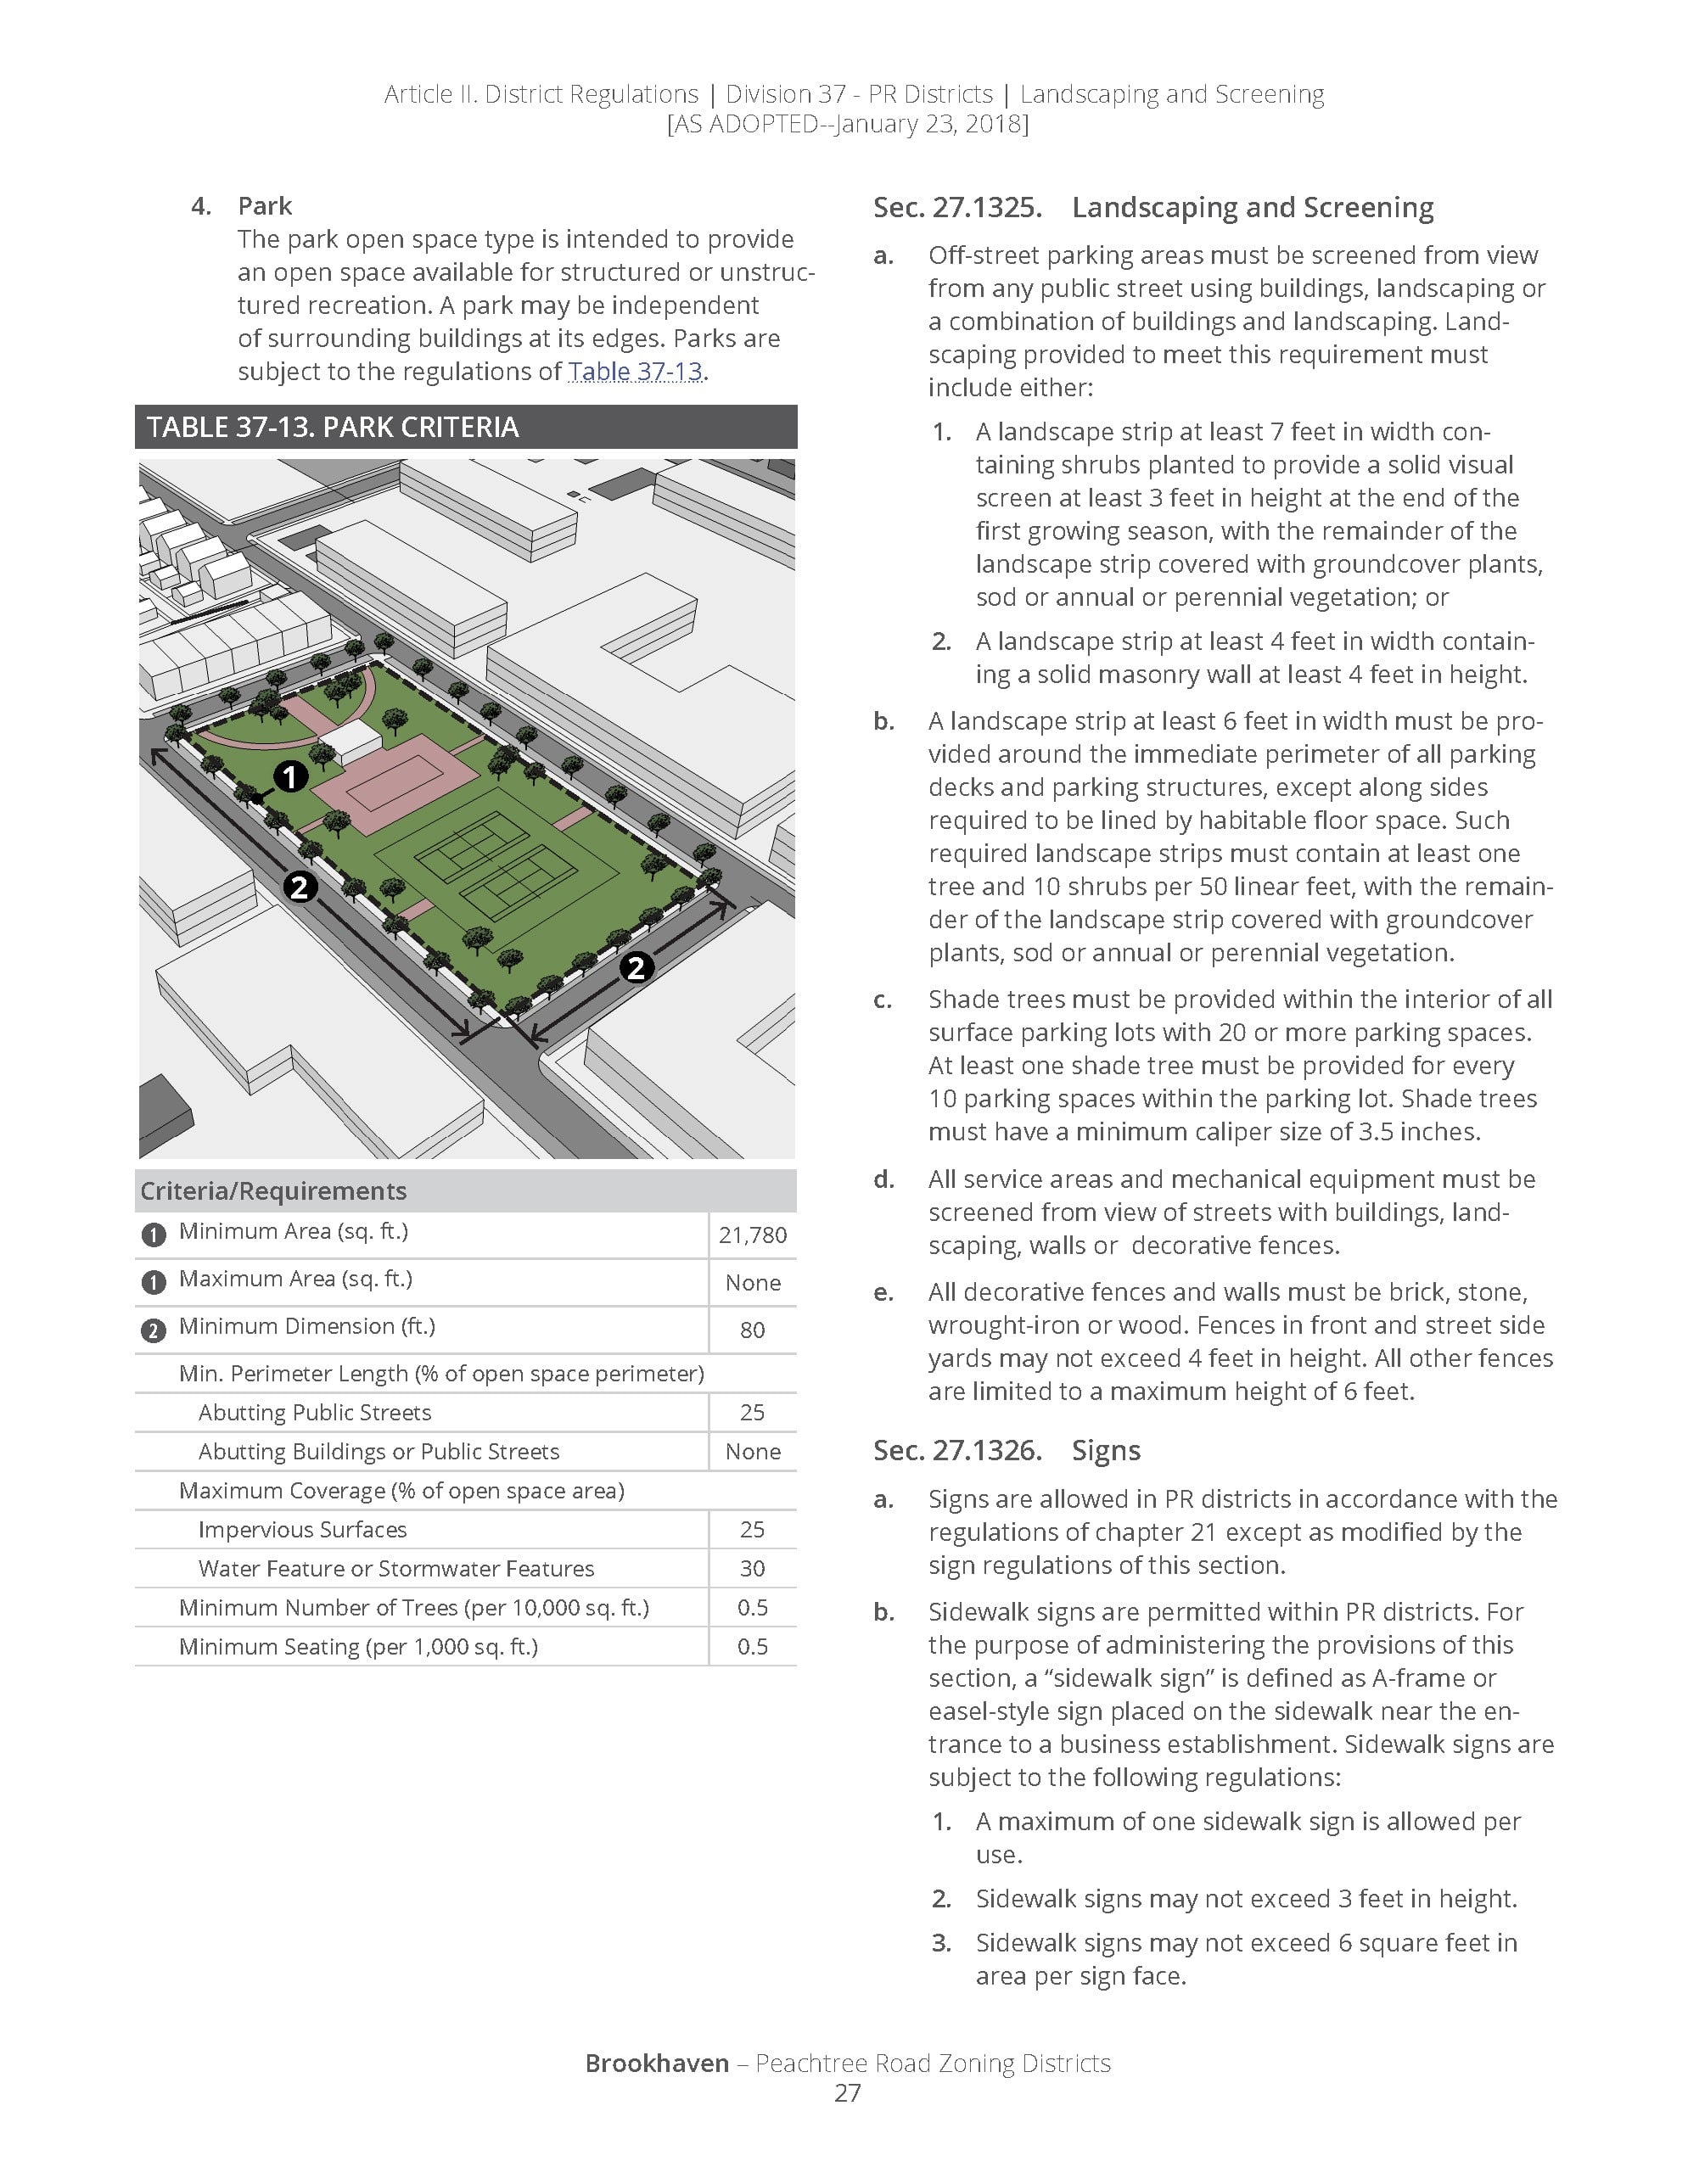 Brookhaven Peachtree Overlay - TSW Planning Architecture Landscape Architecture, Atlanta